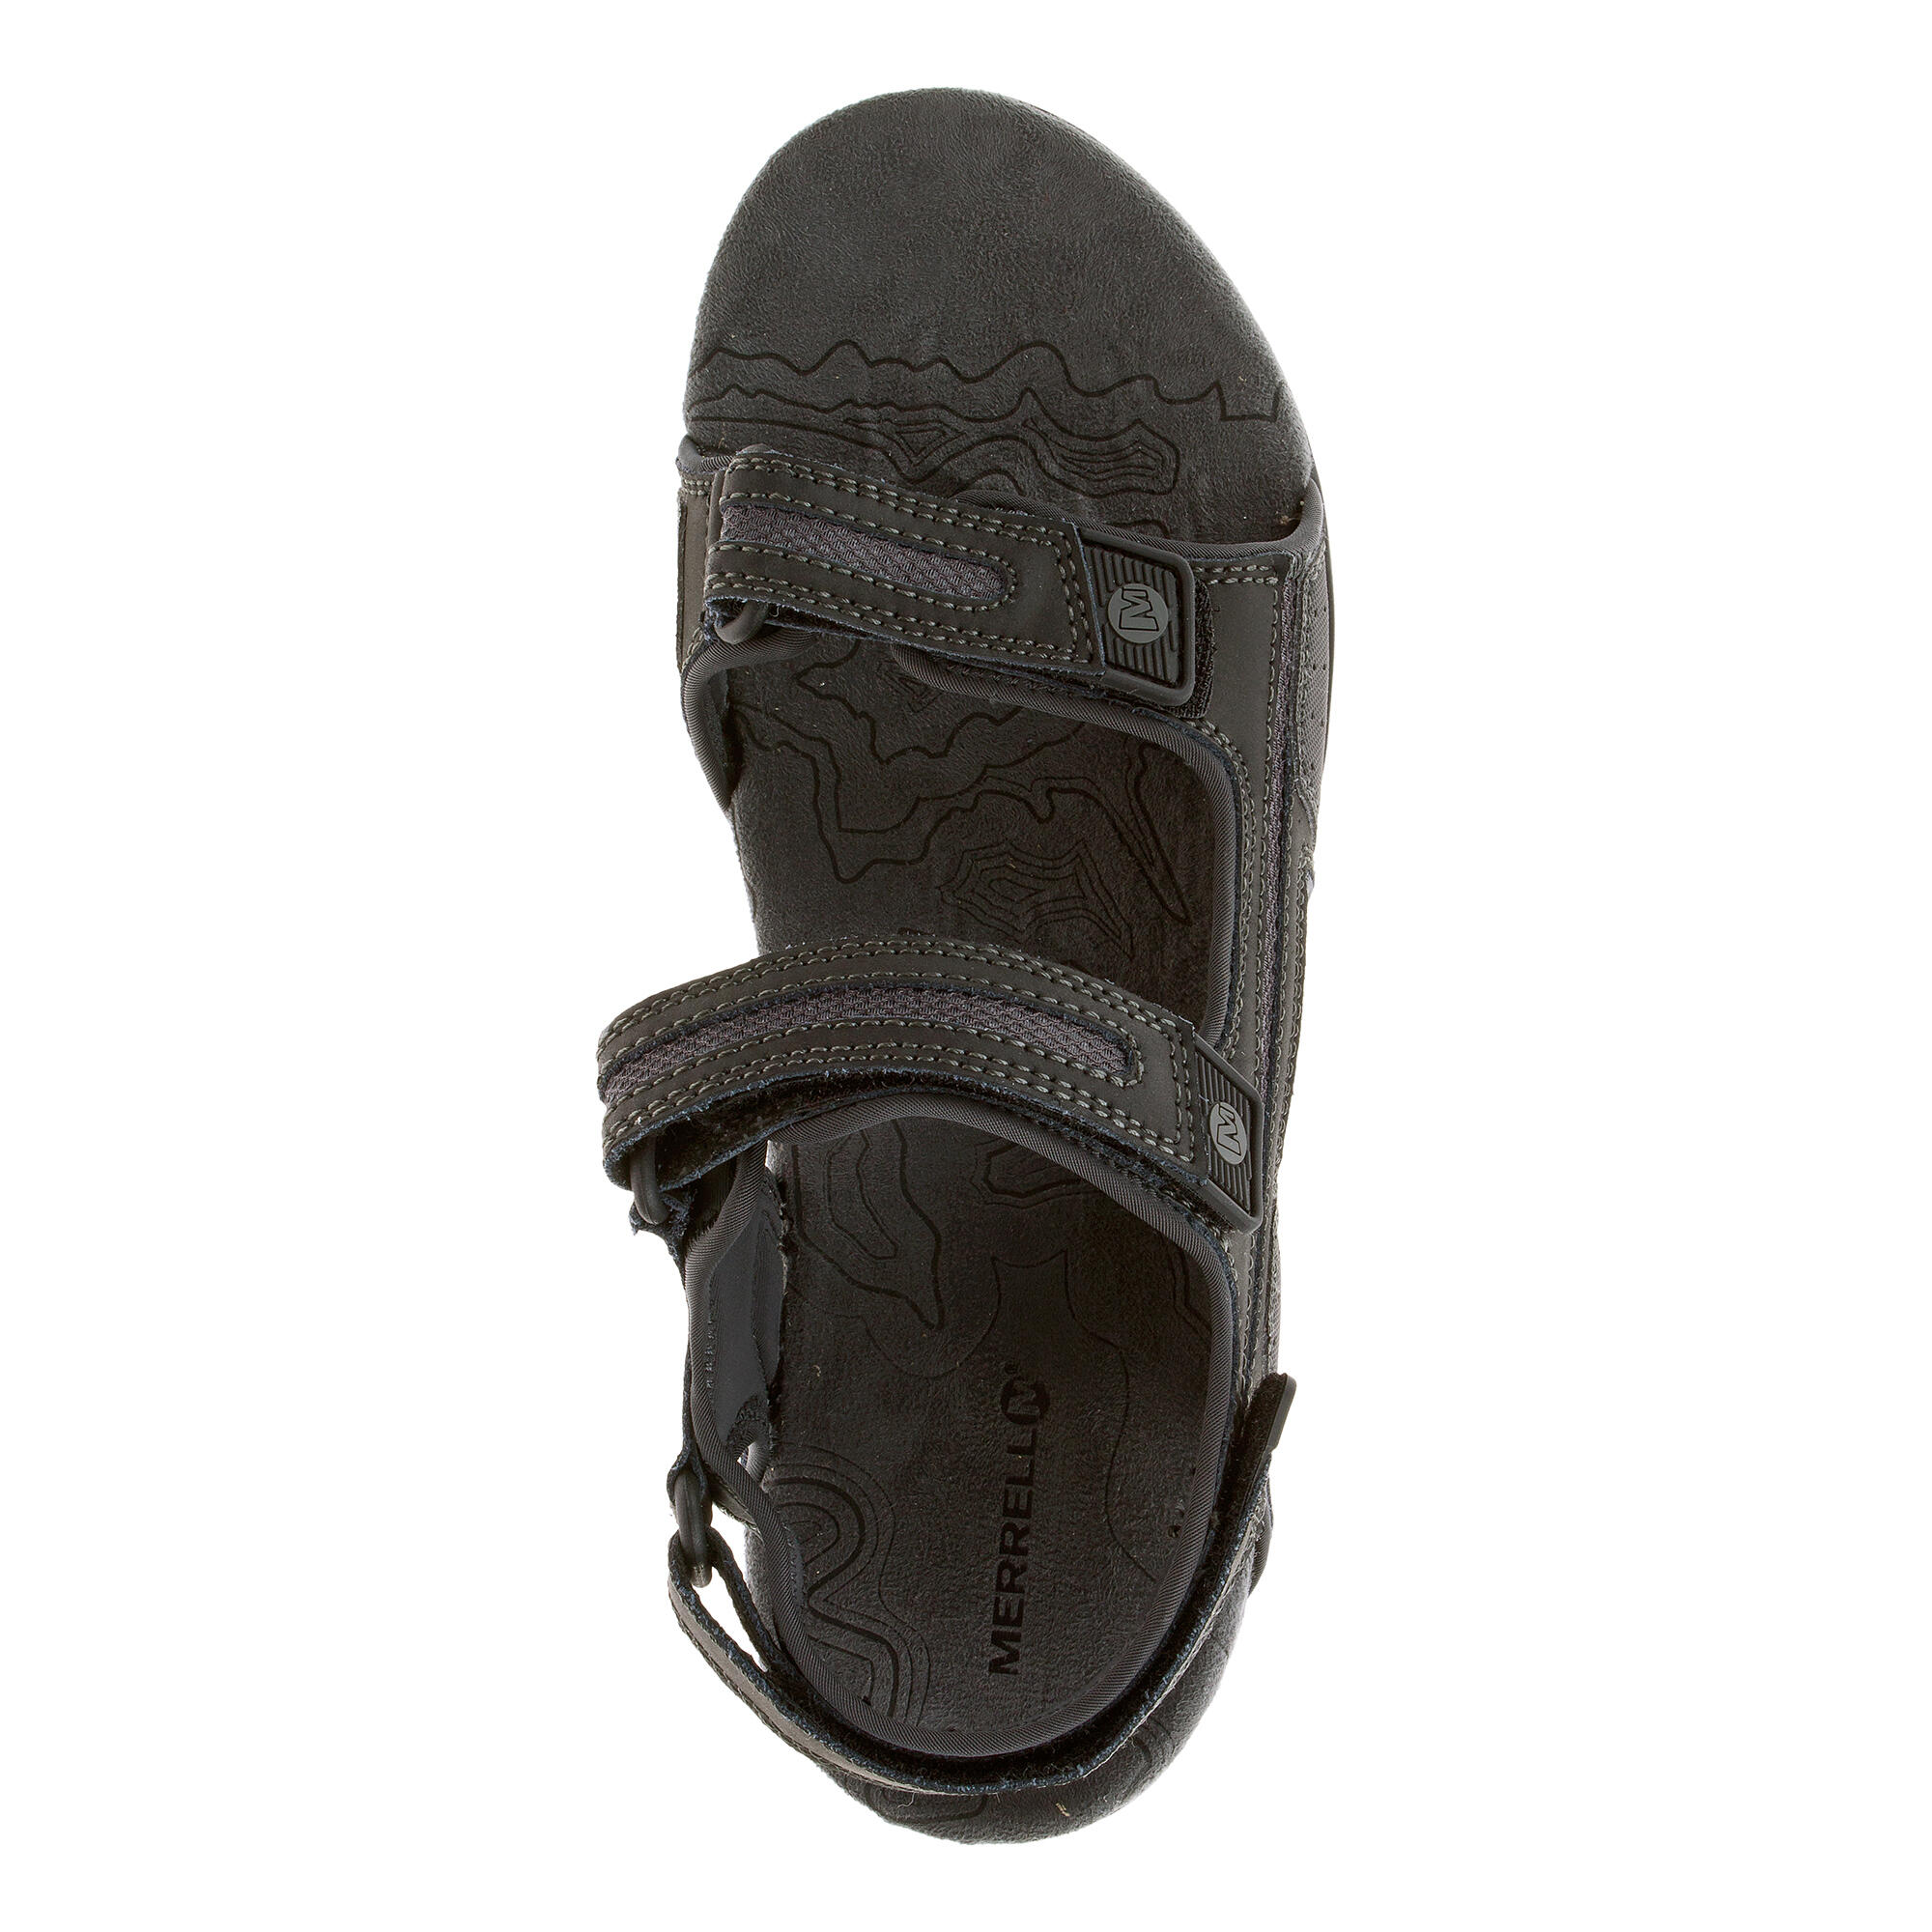 Men's walking sandals - Merrell Sandspur - Black 7/8